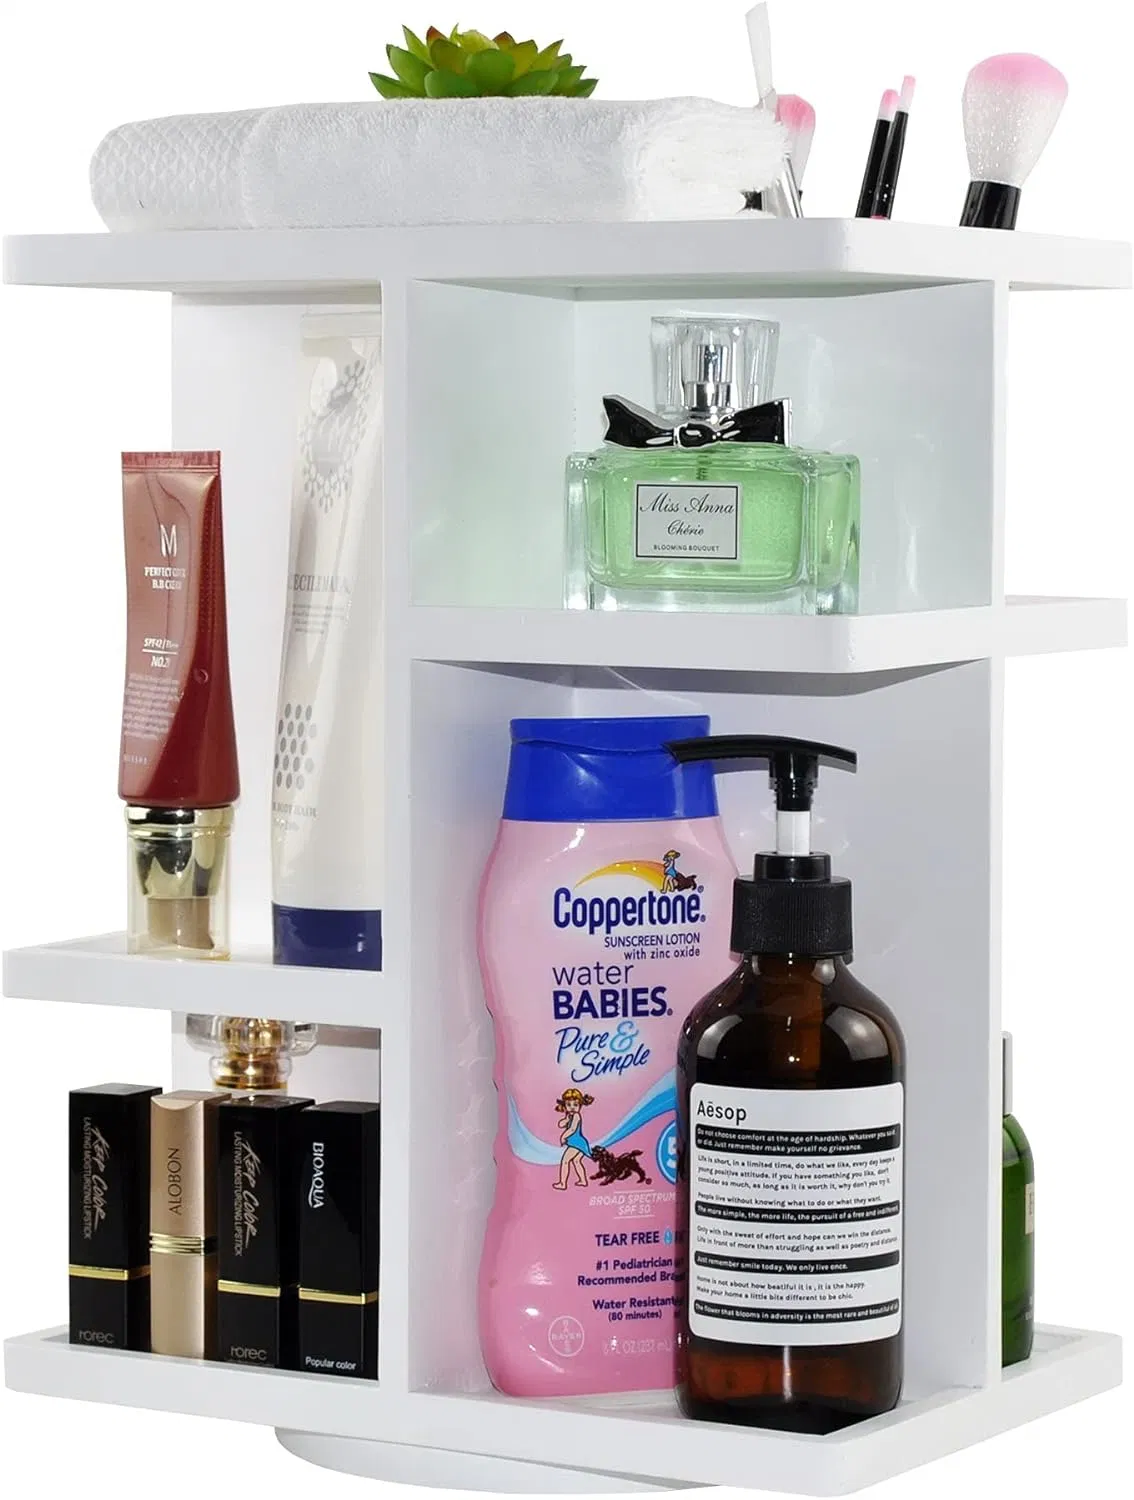 Wooden Office Stationery Desktop Makeup Cosmetics Toiletries Vanity Desk Bedroom Closet Storage Shelf